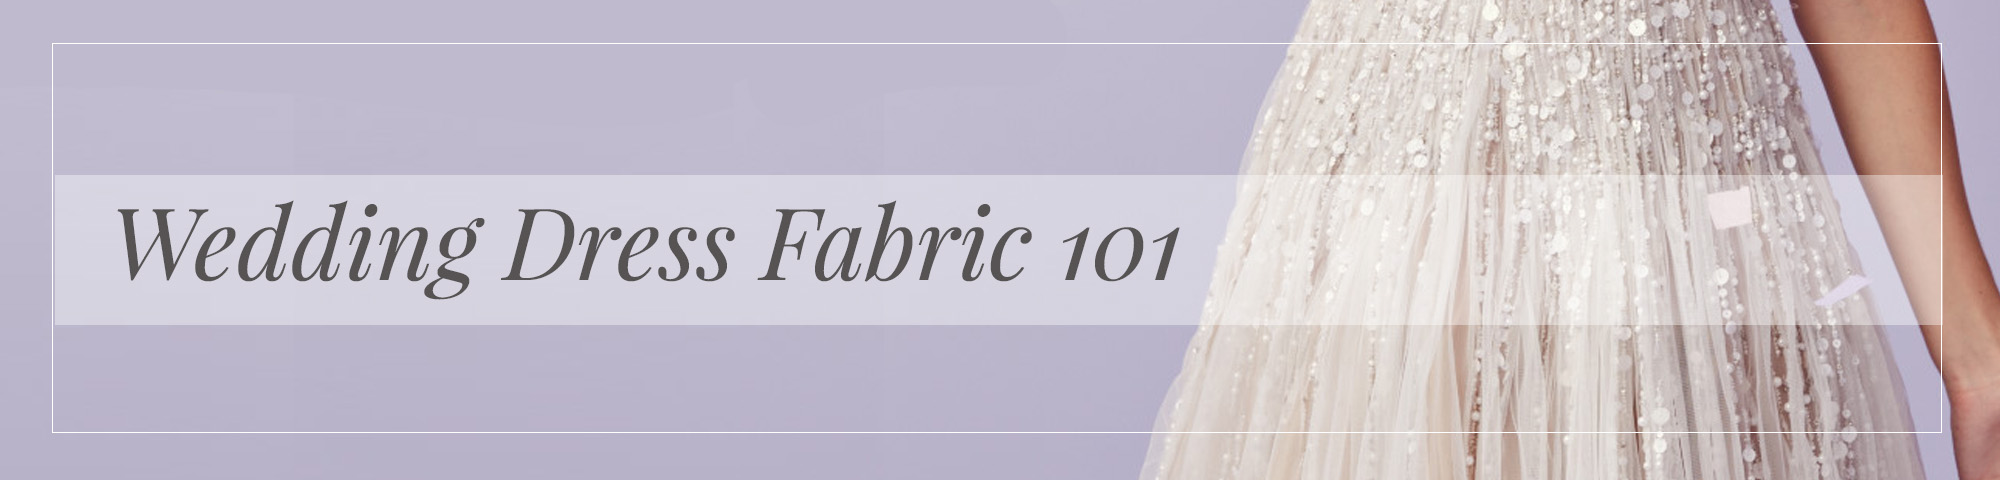 Wedding Dress Fabrics Guide